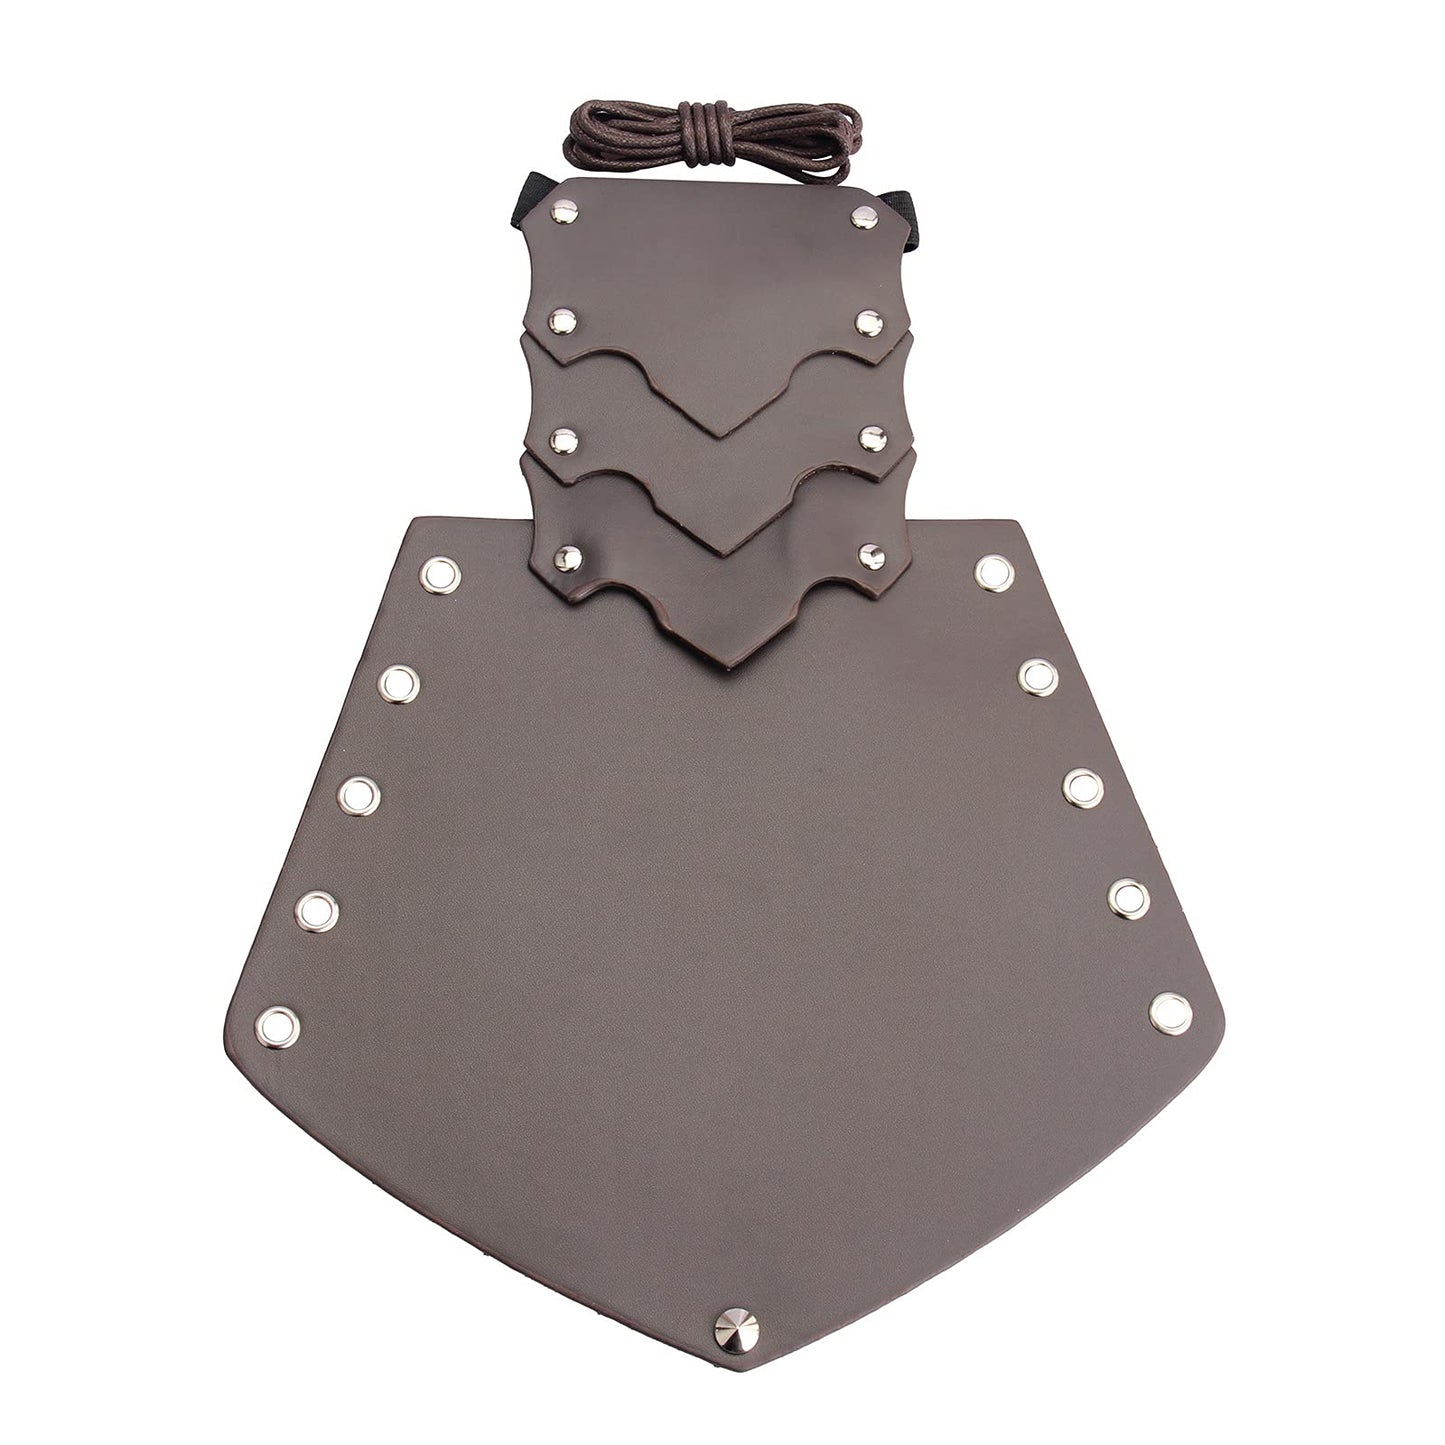 JAOYU Leather Bracers Arm Armor Viking Cuffs